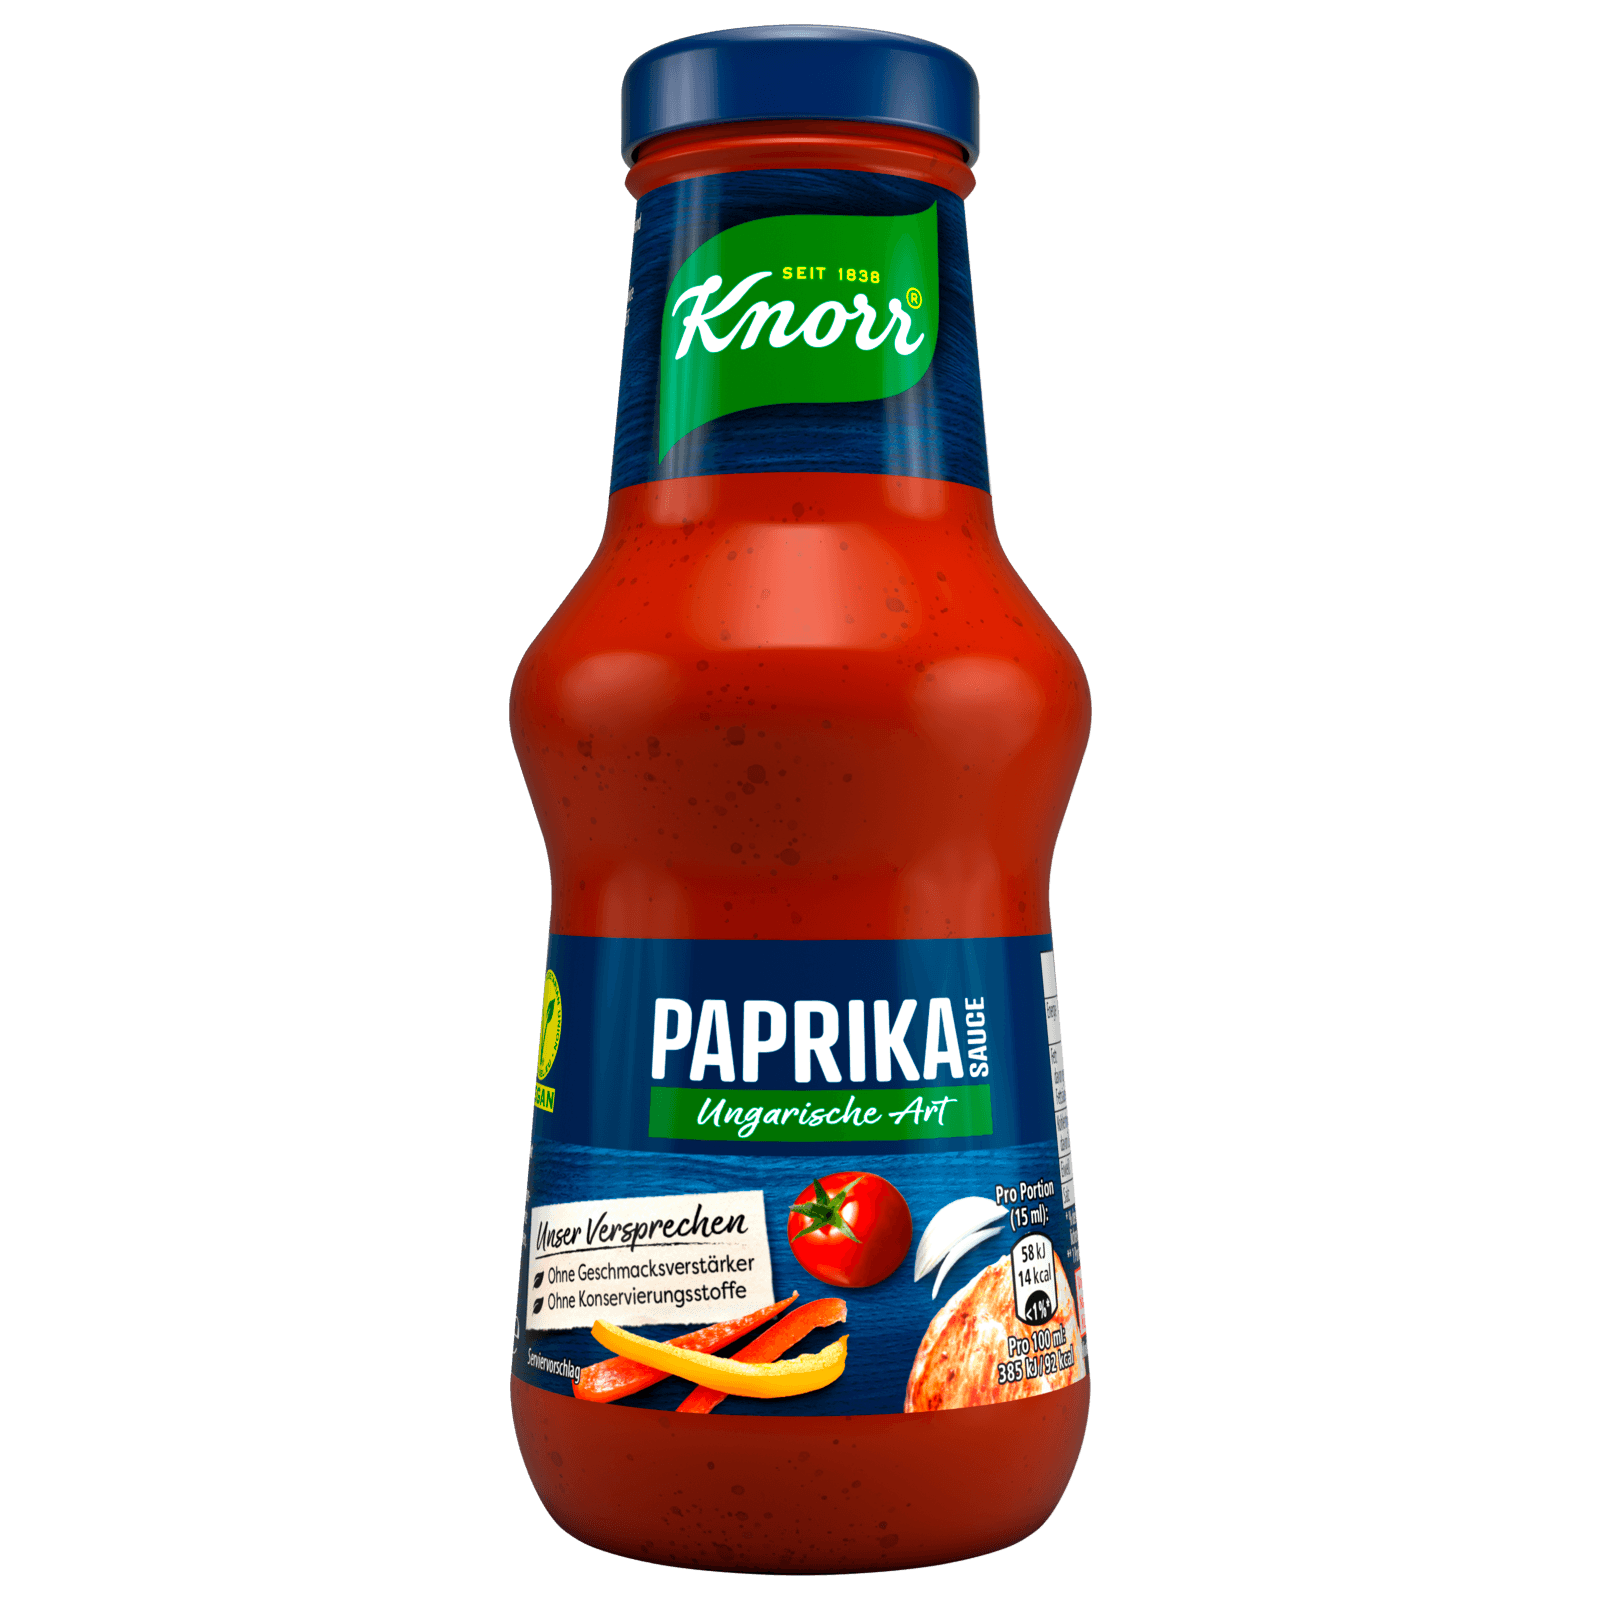 Knorr Paprika Sauce Ungarische Art 250ml bei REWE online bestellen!